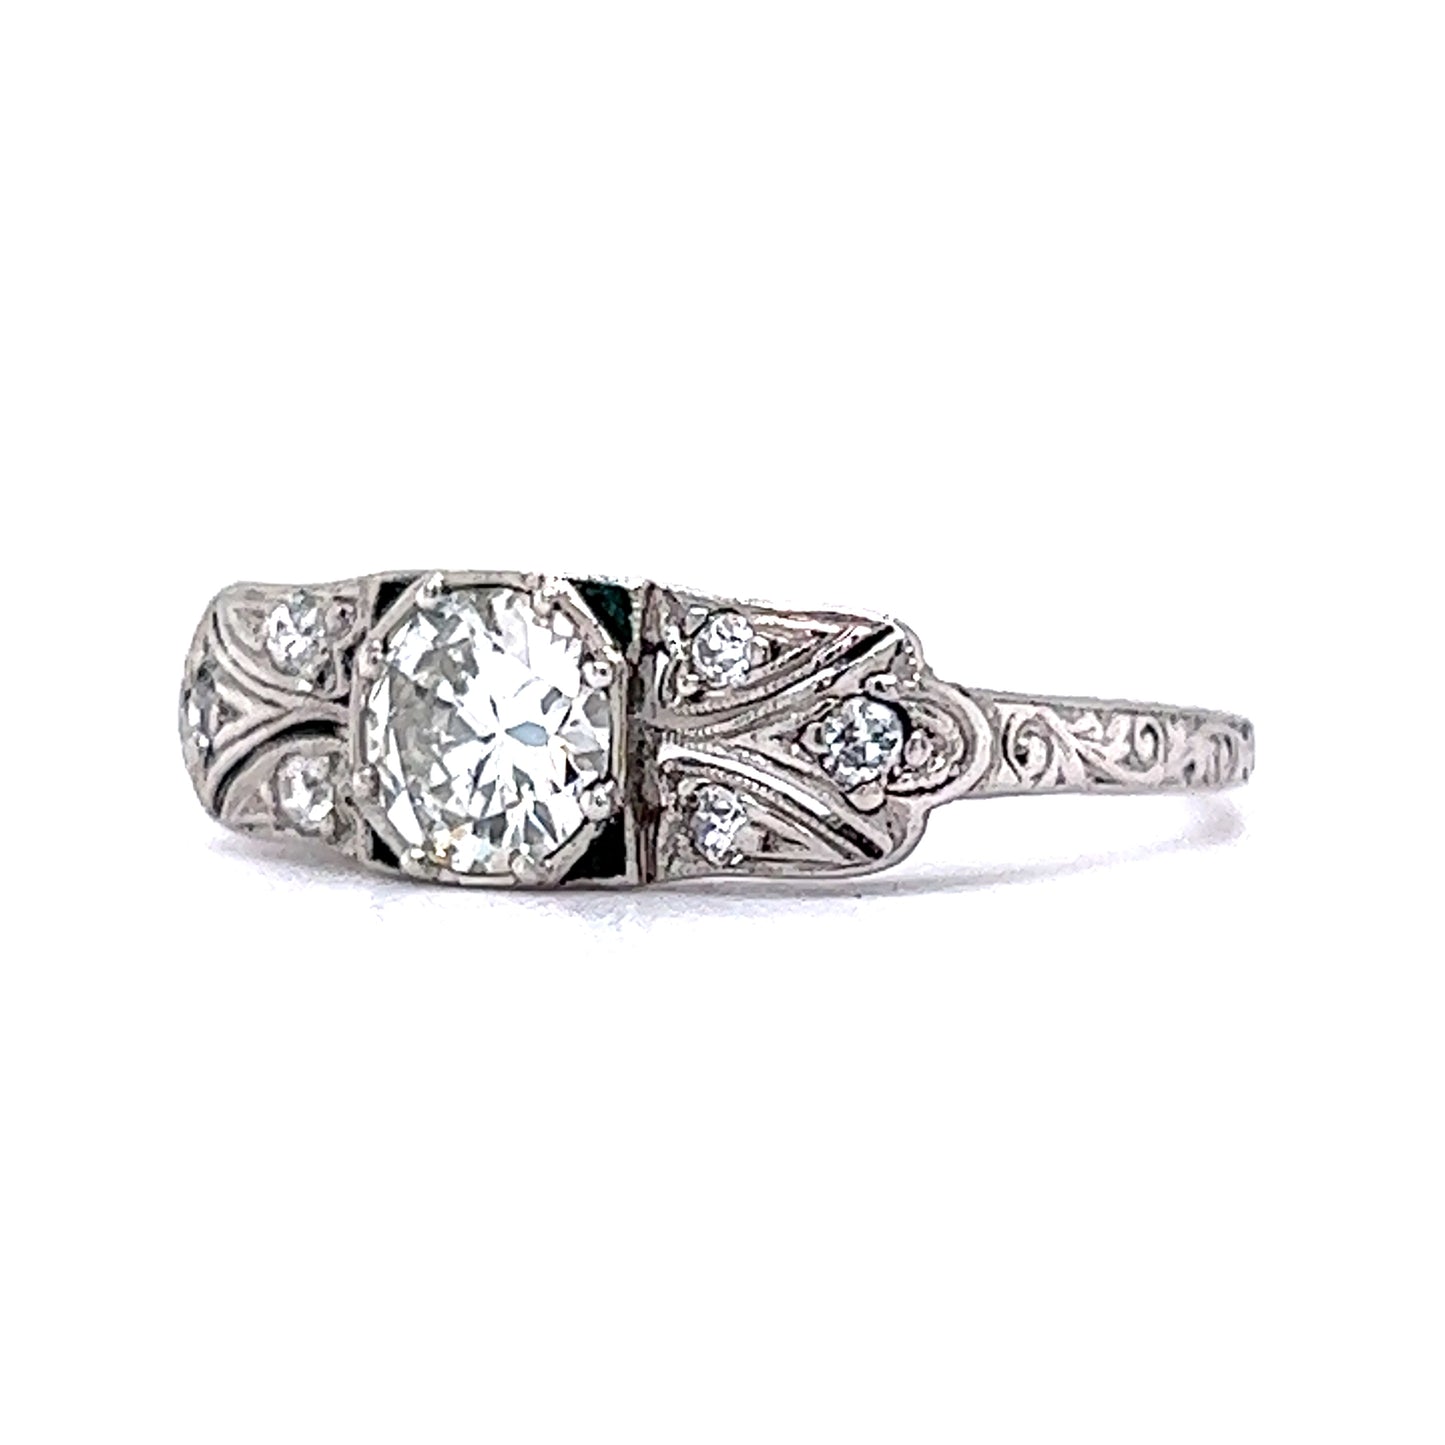 Vintage Art Deco Tiffany & Co Engagement Ring in Platinum